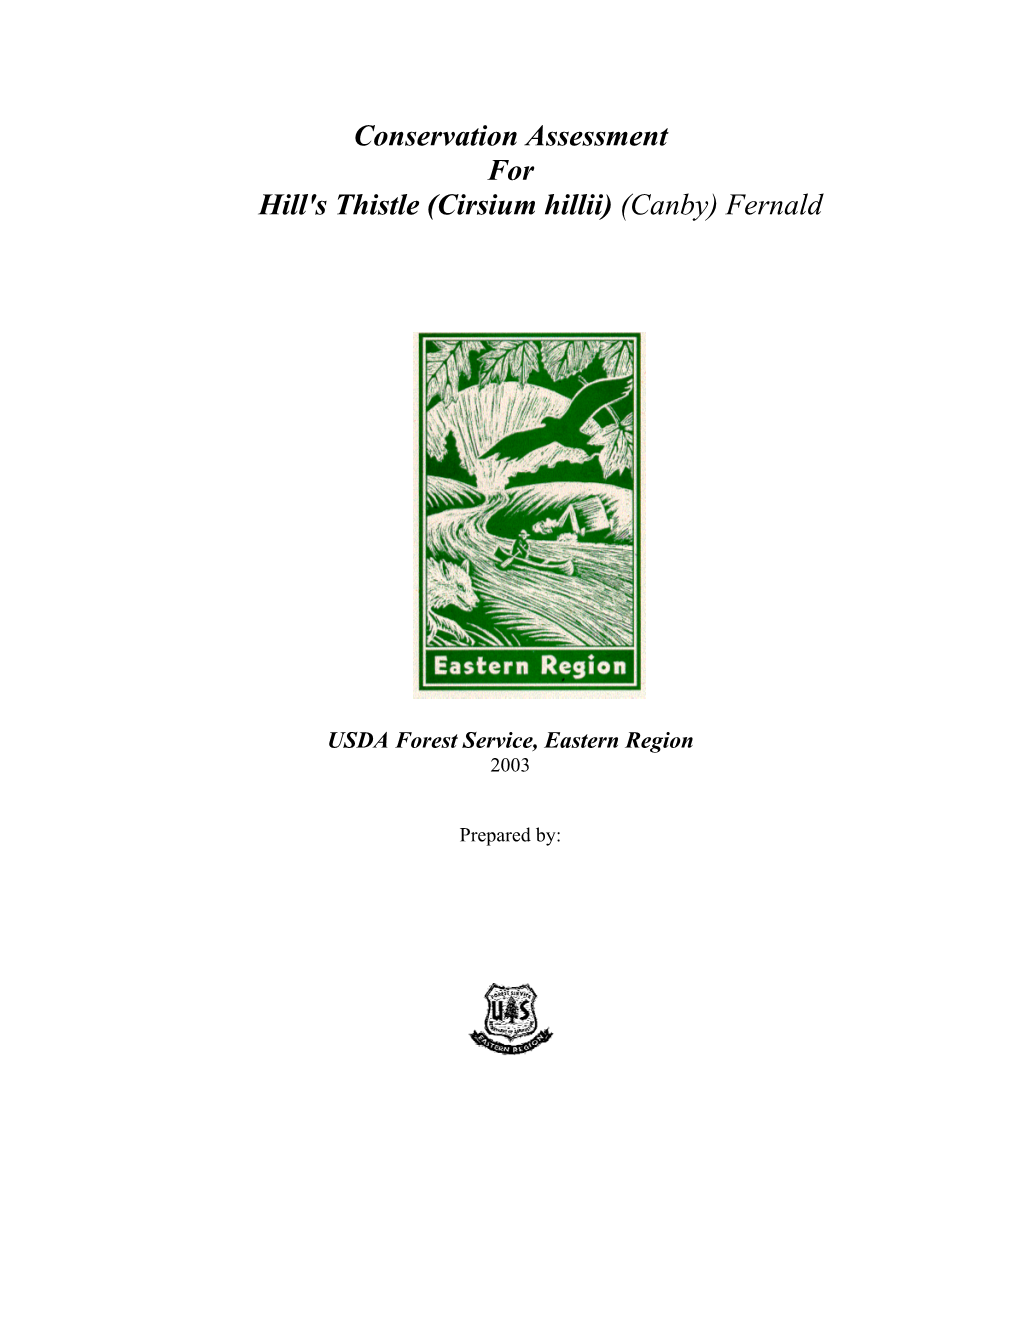 Cirsium Hillii) (Canby) Fernald